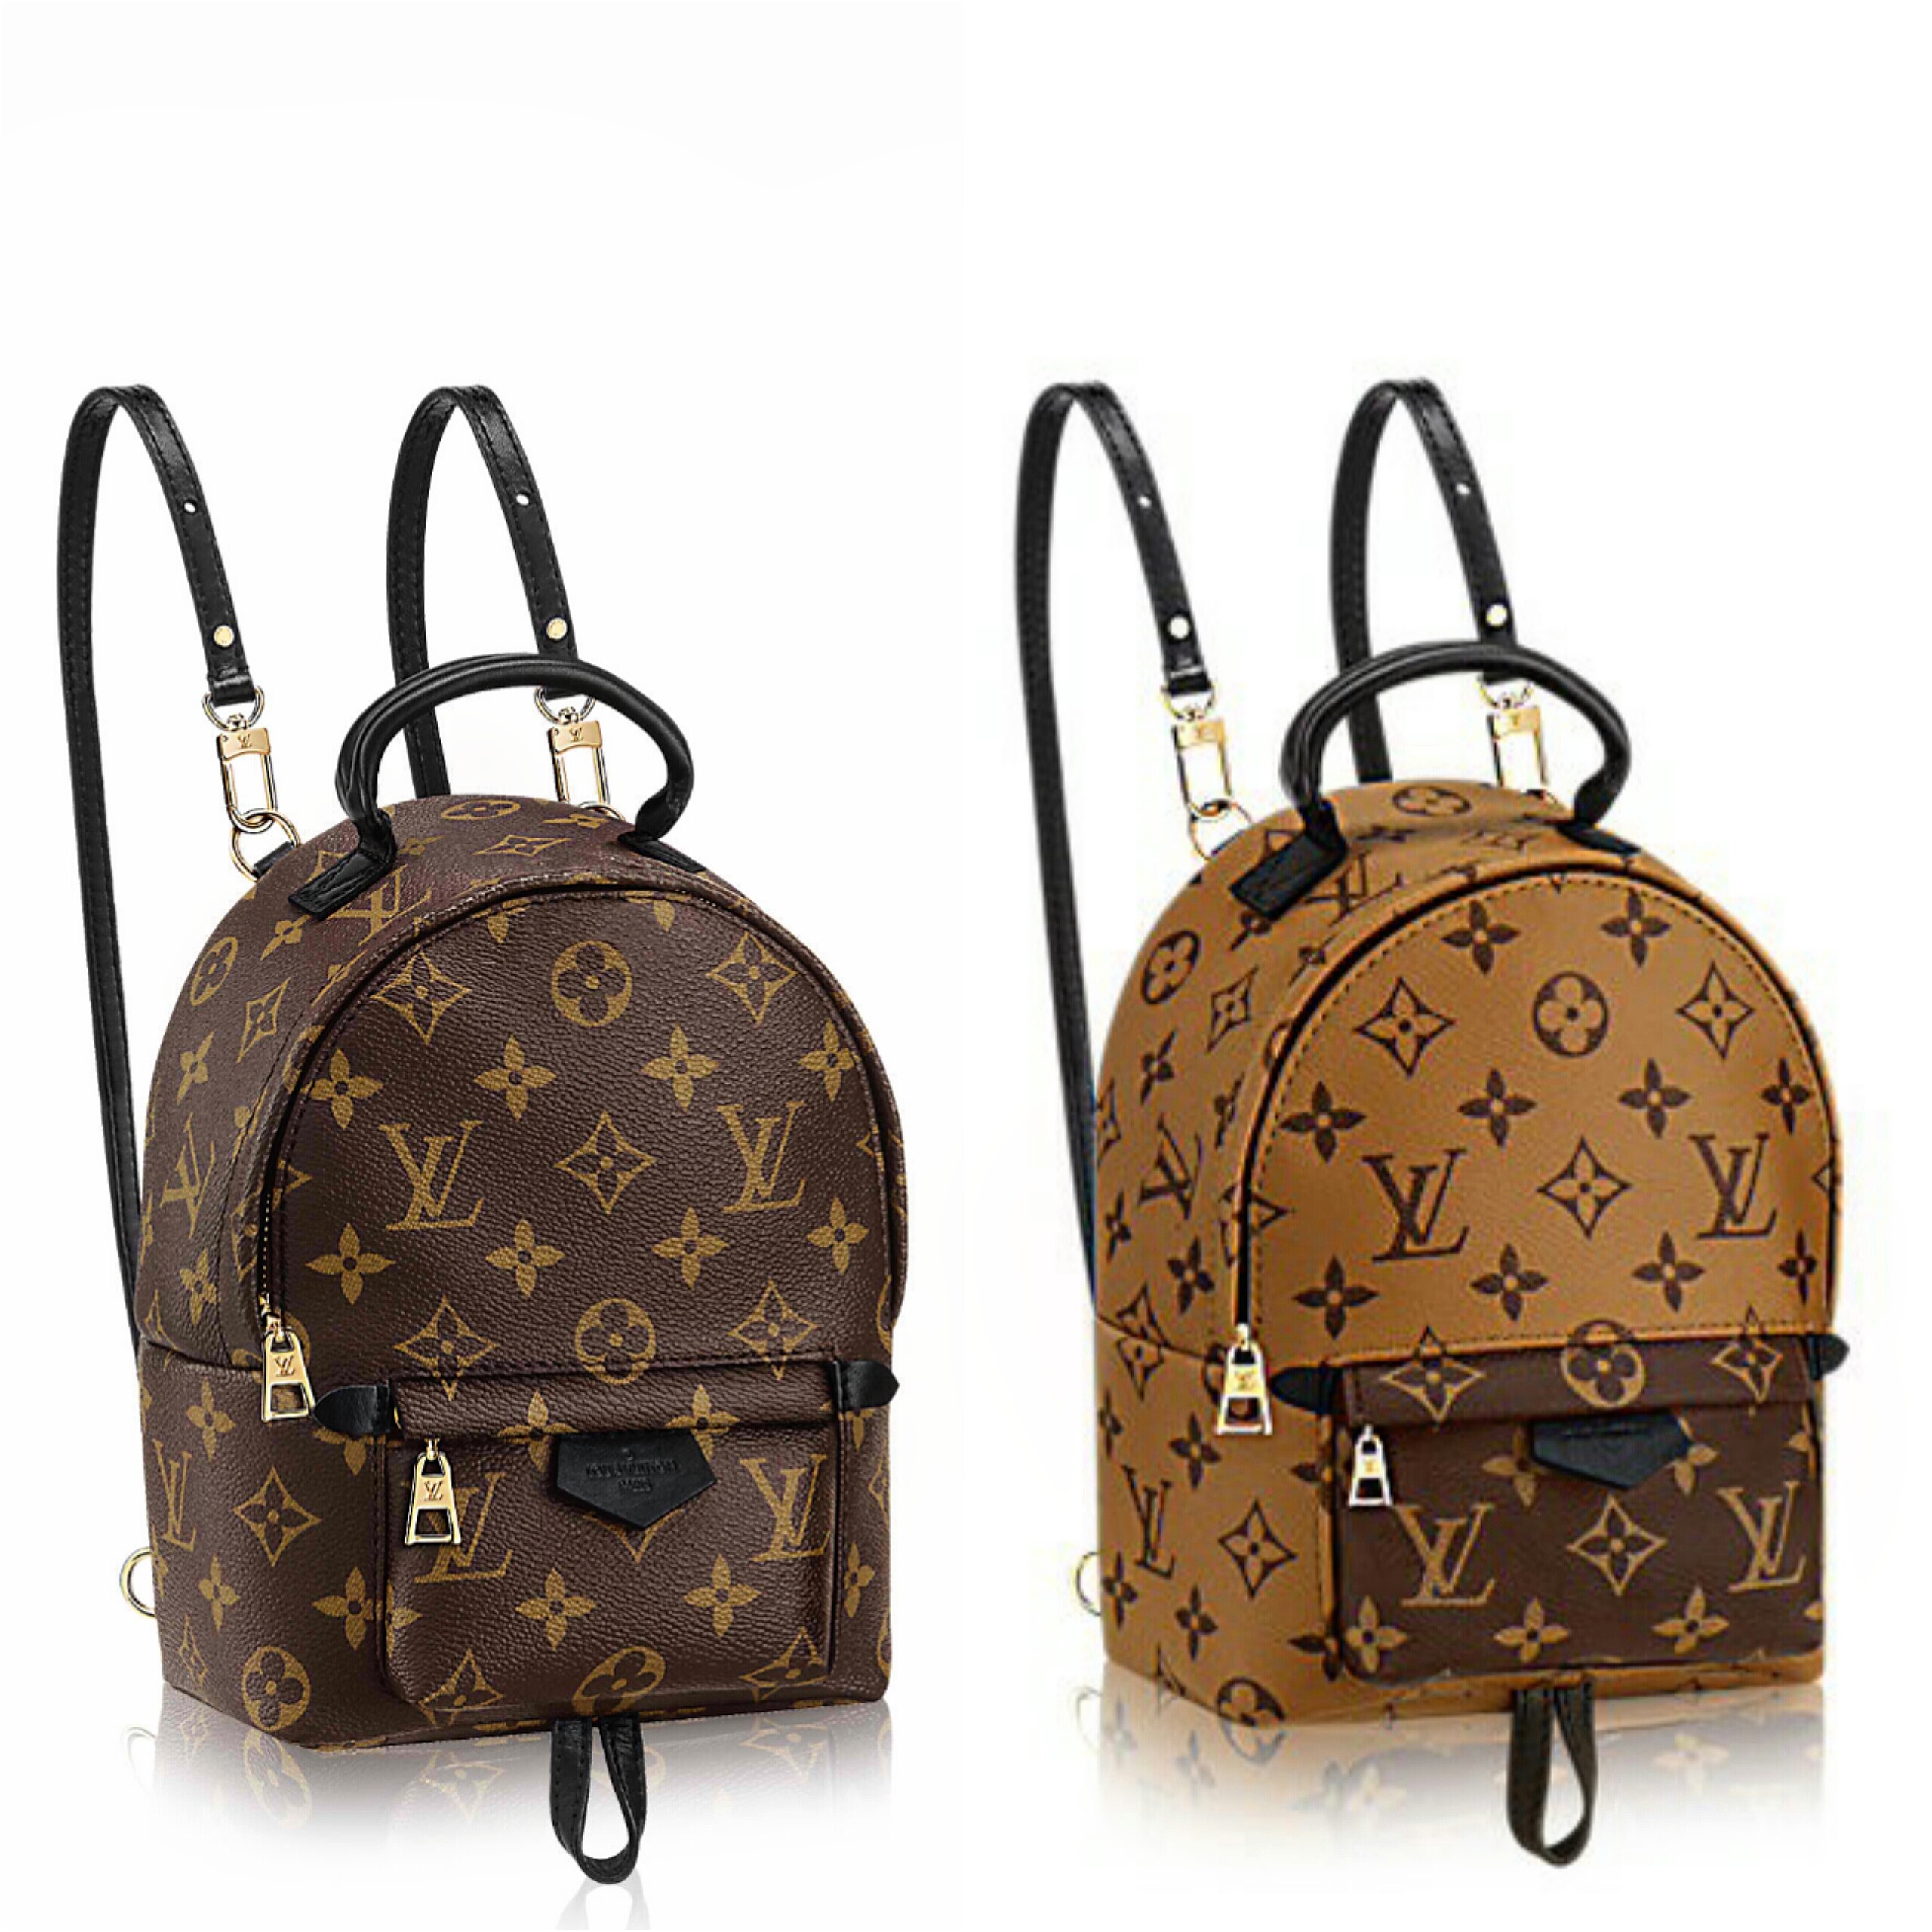 Bag Review: Louis Vuitton Palm Springs Mini Mono Backpack | The Bag Hag Diaries